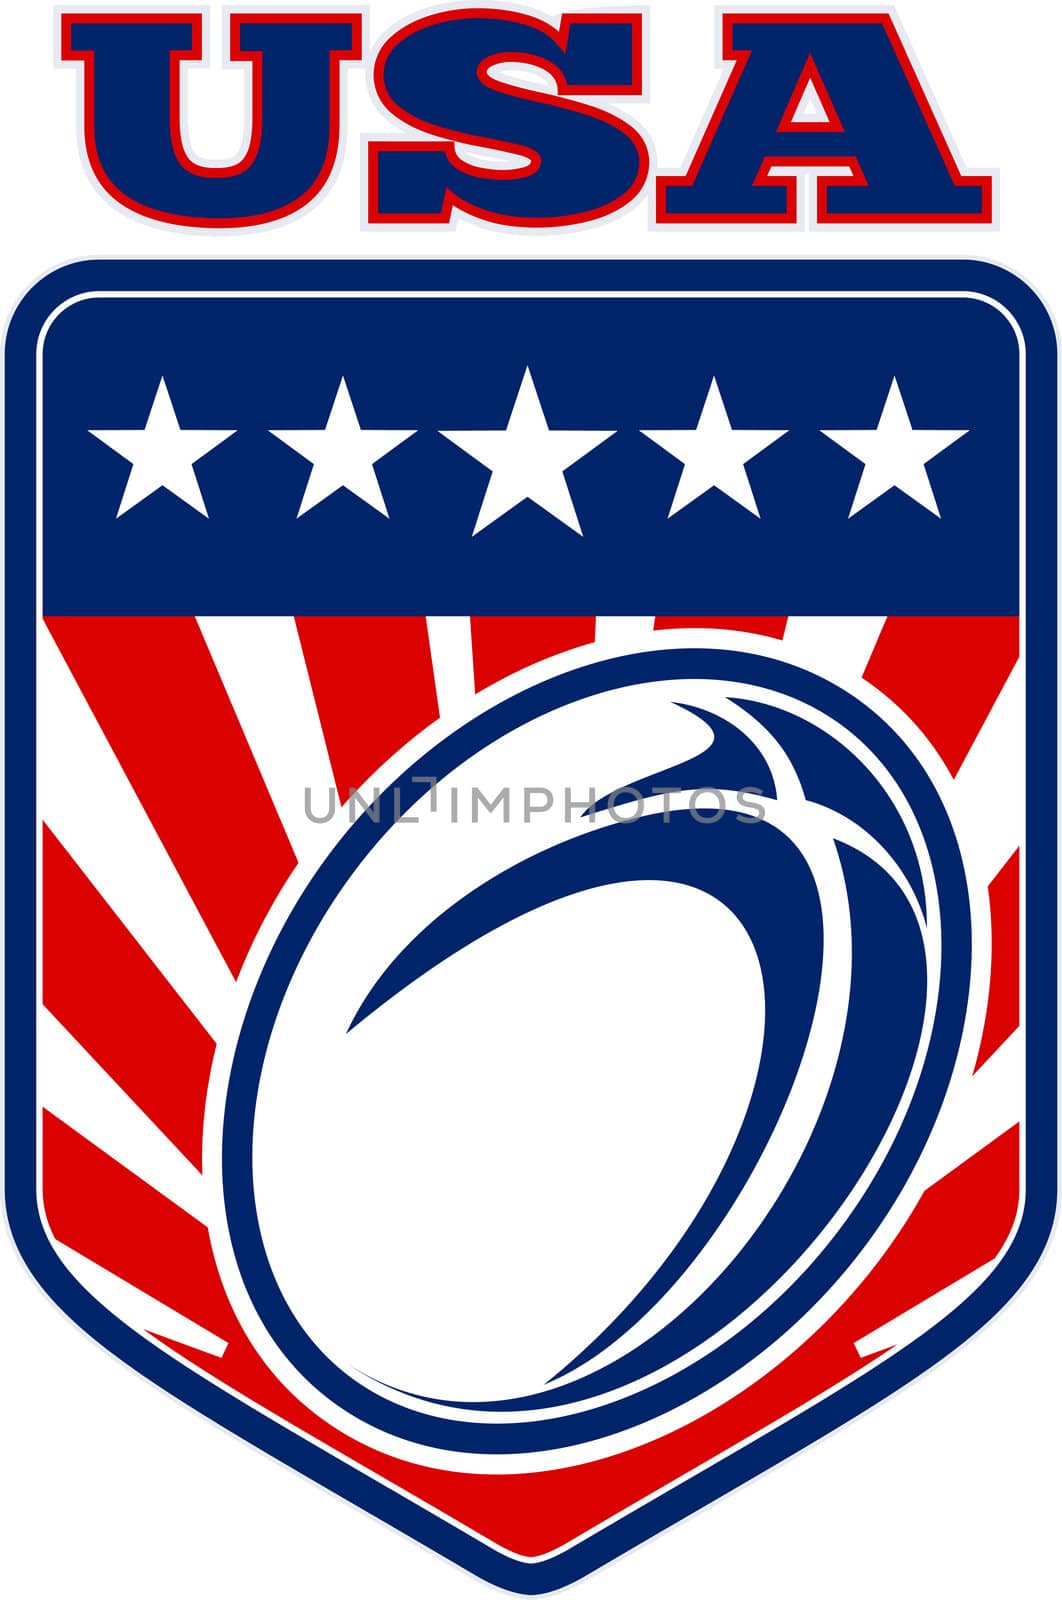 USA rugby ball stars stripes shield by patrimonio